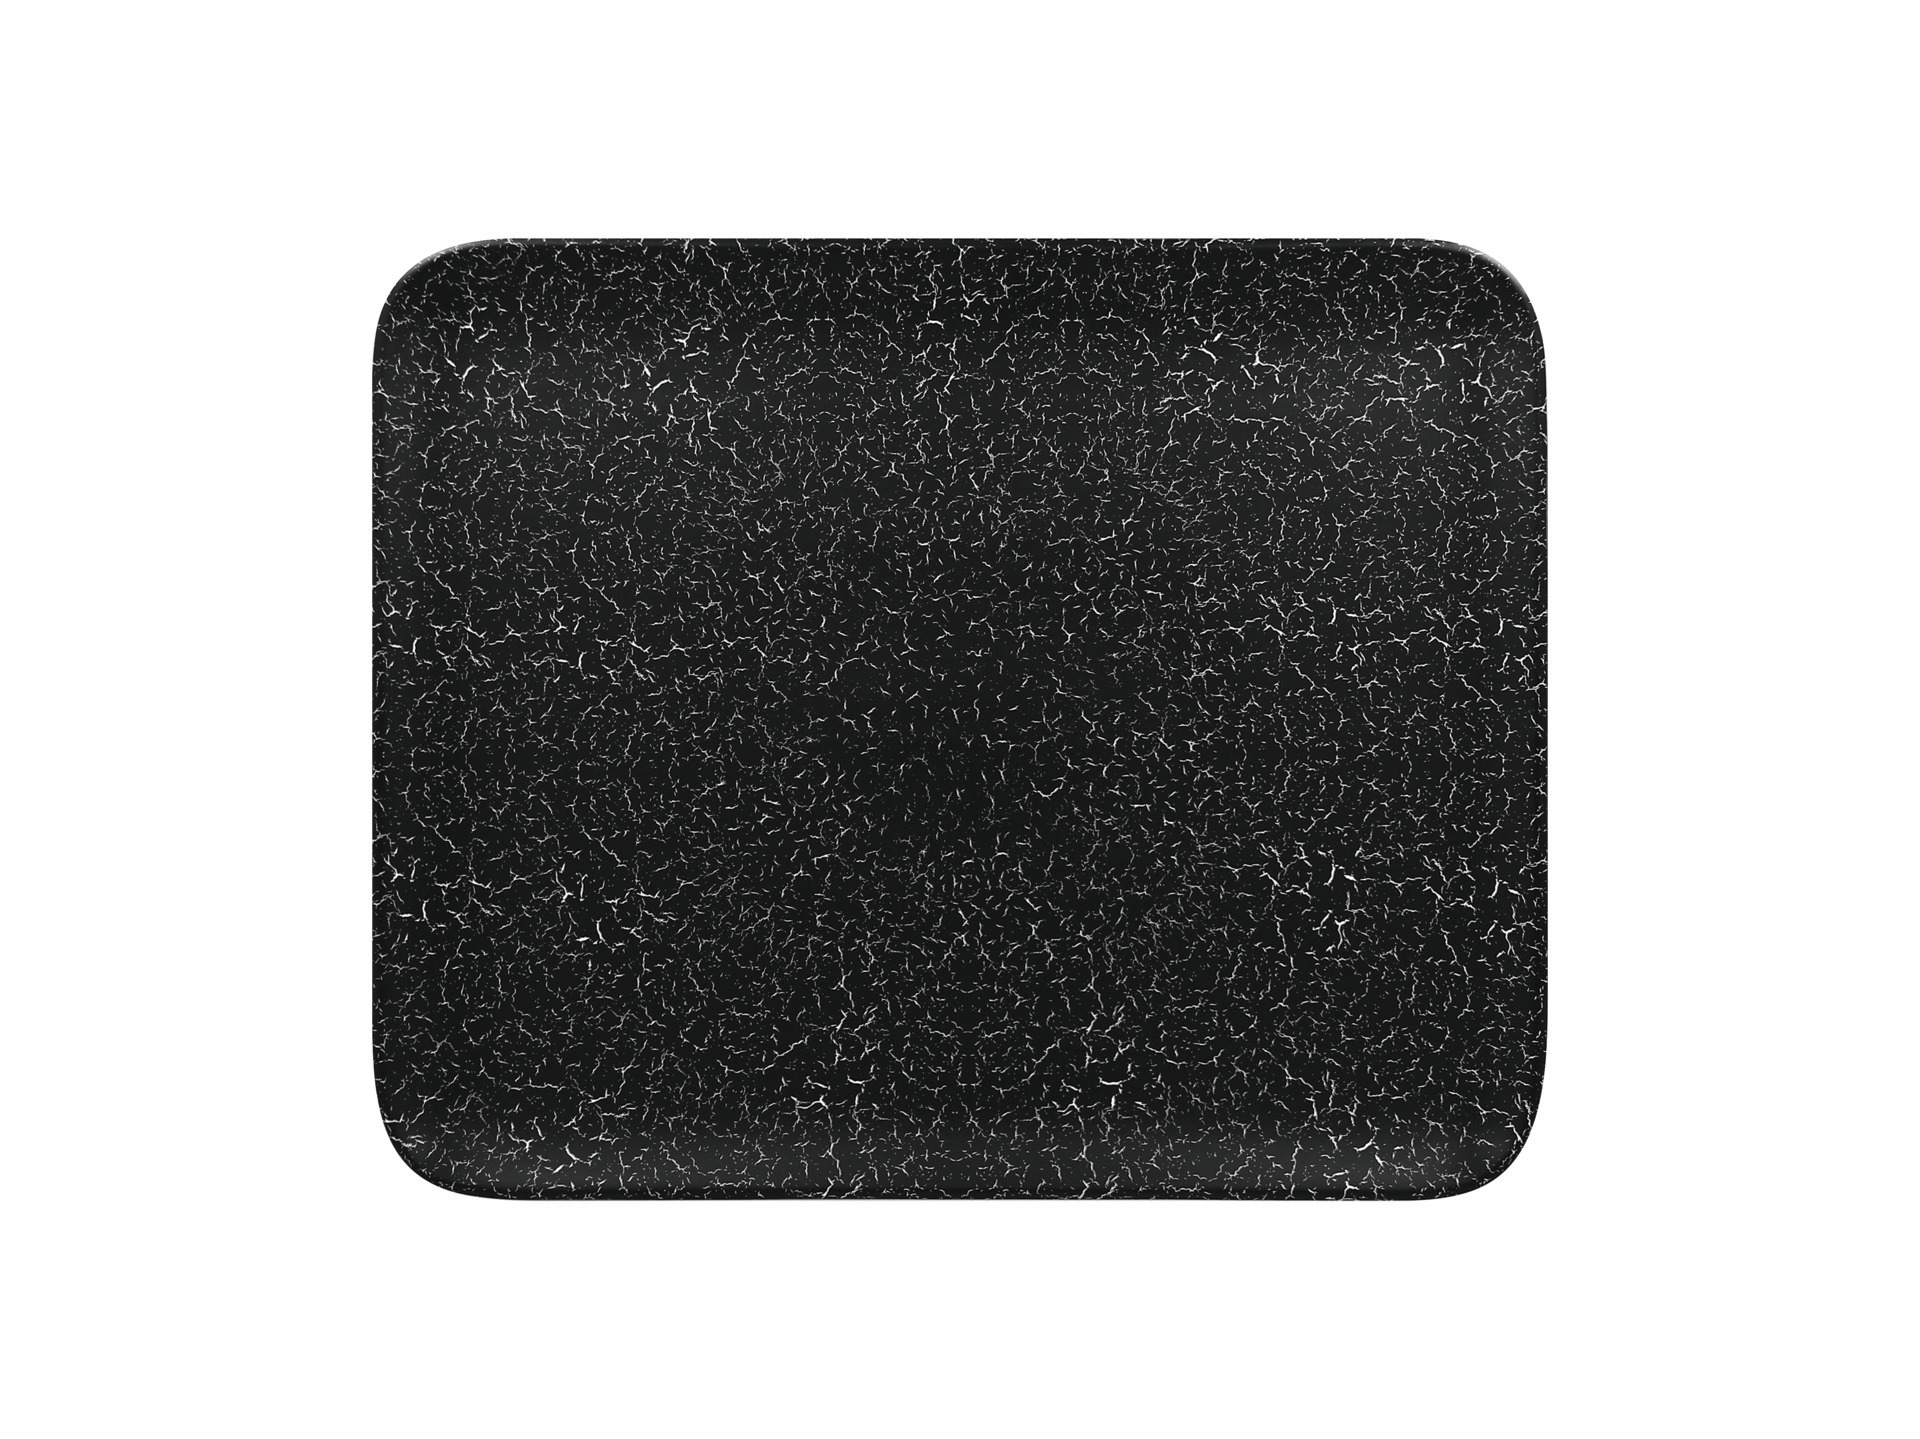 Platte rechteckig 330 x 270 mm schwarz